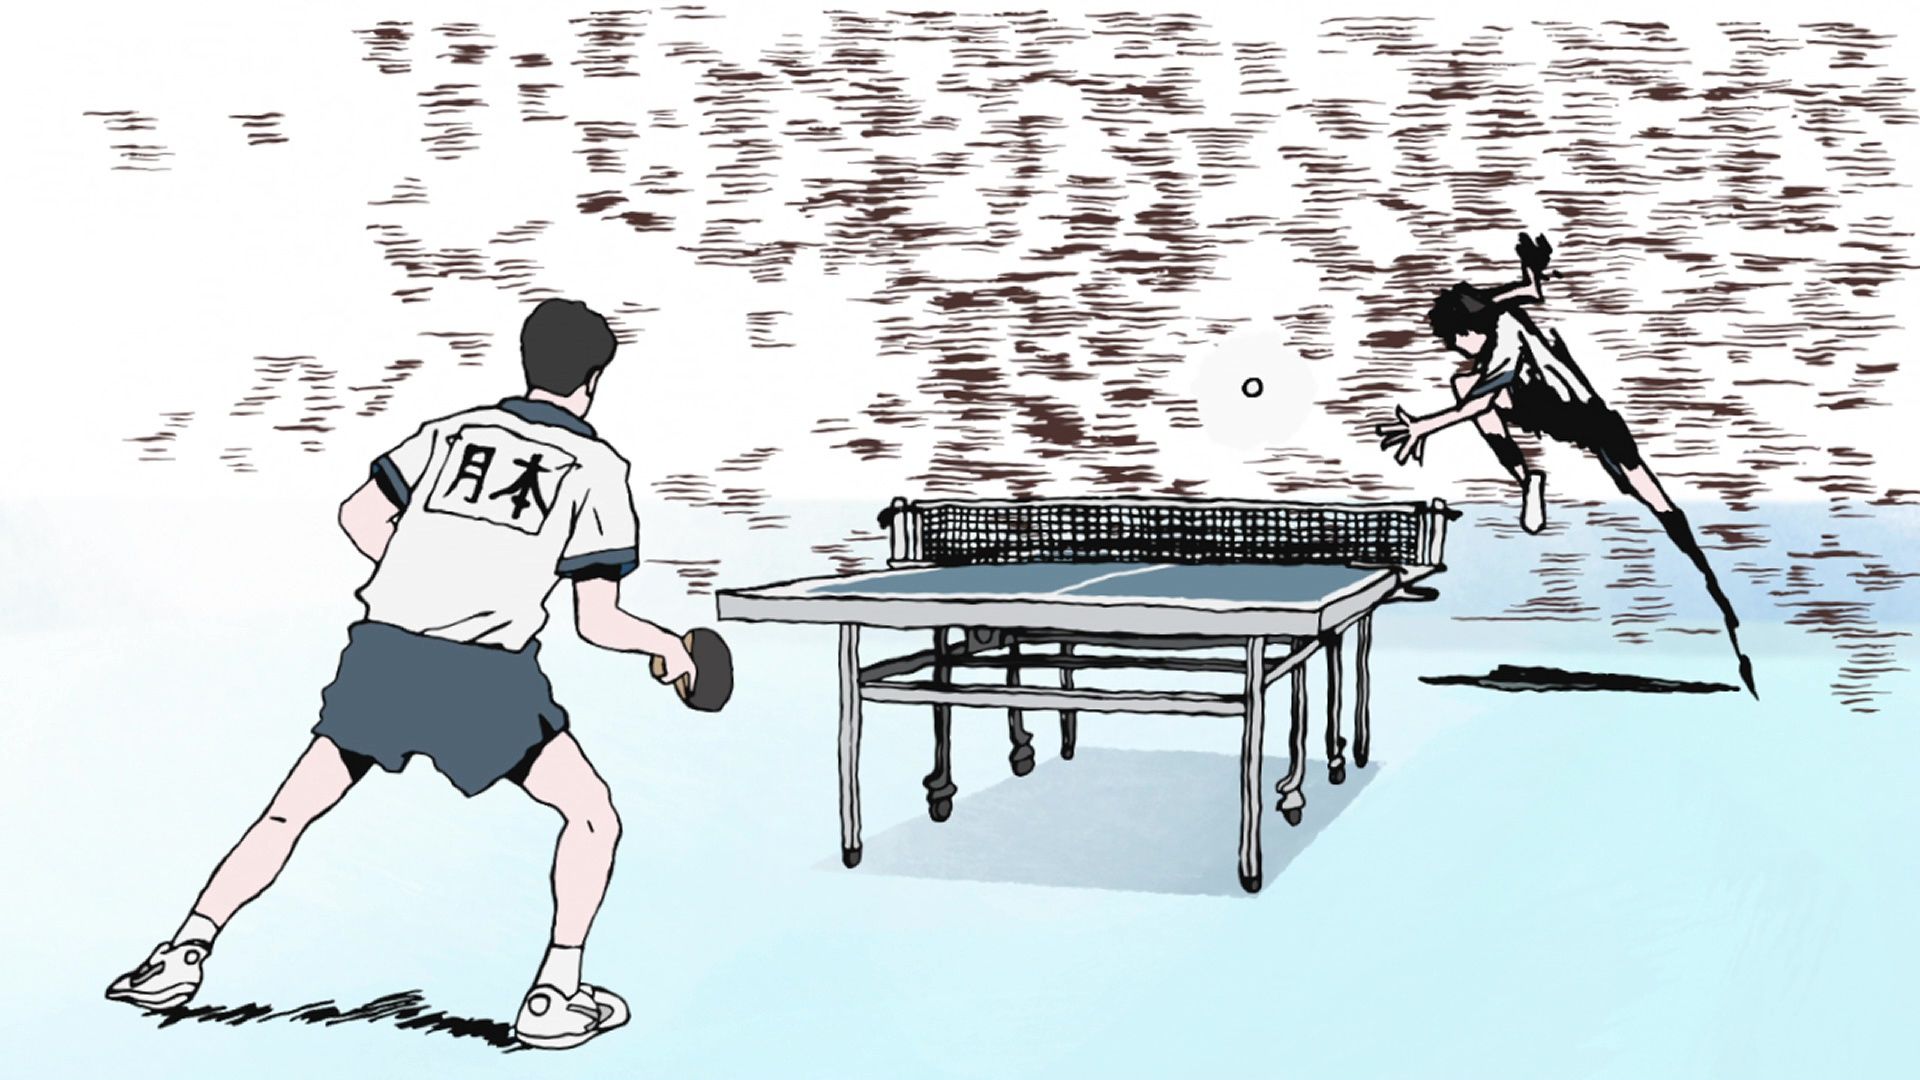 Ping Pong the Animation  Anime, Anime wallpaper, Anime images